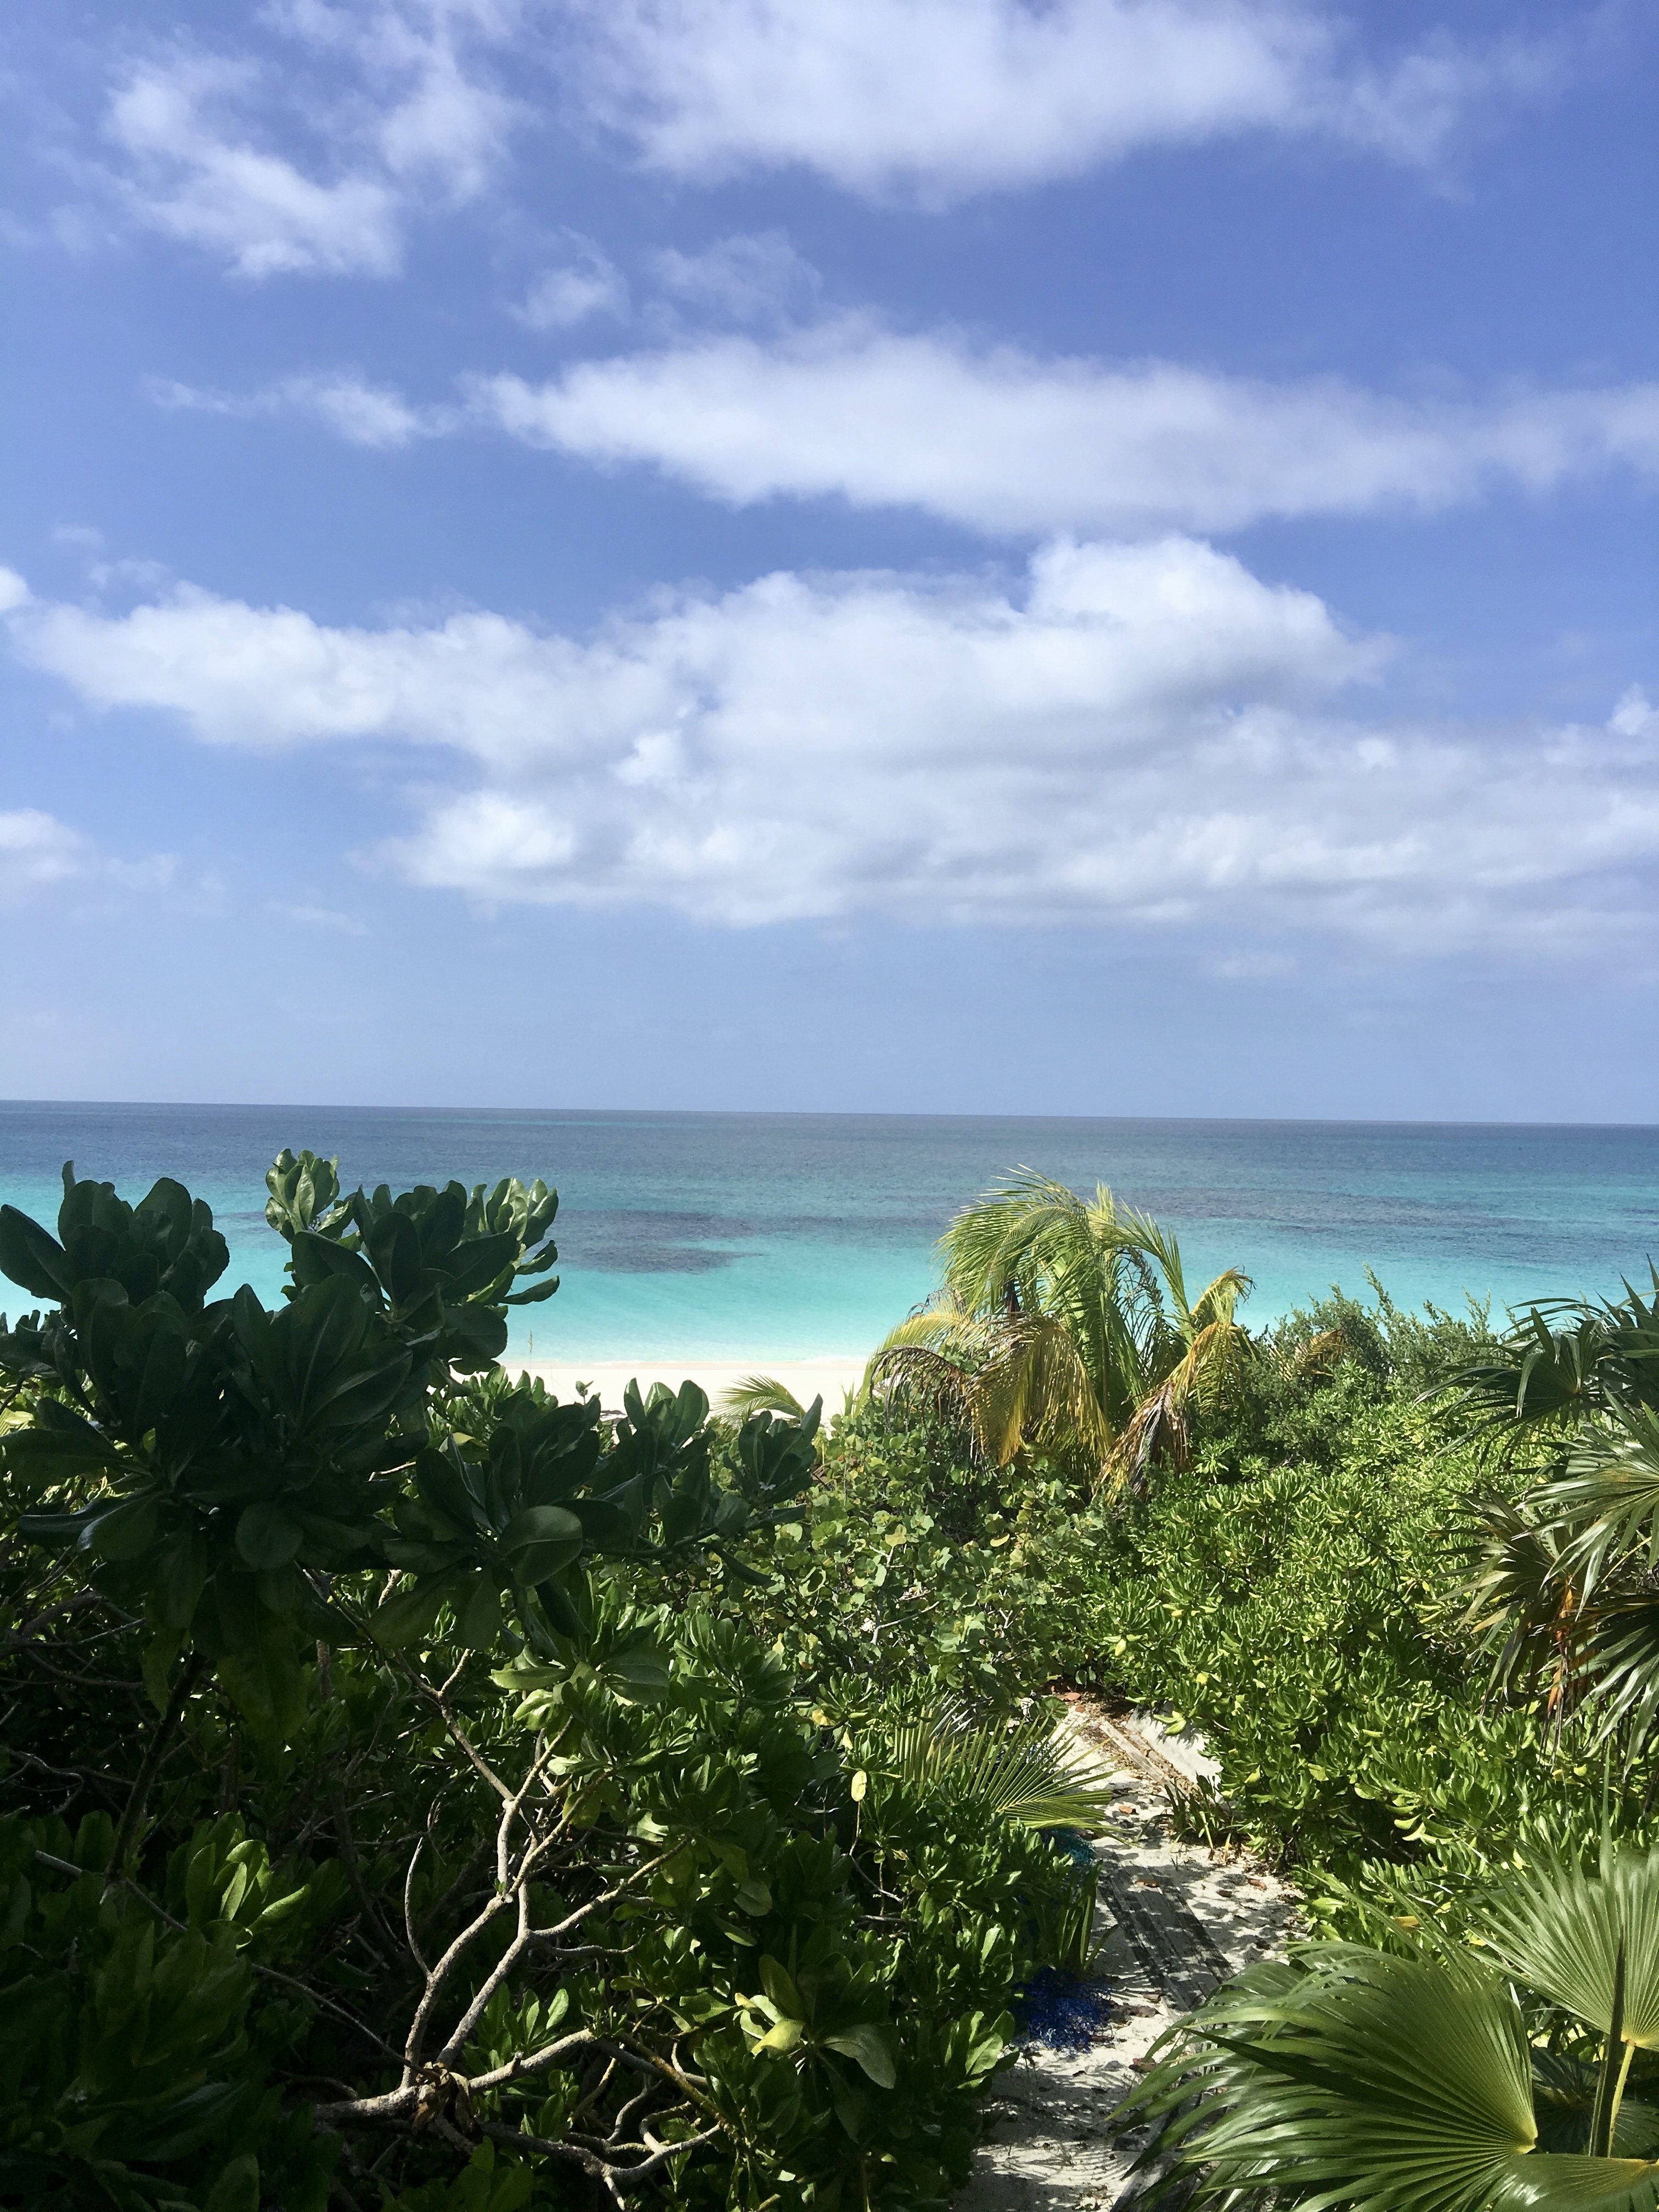 Trip Report: Abacos, Bahamas